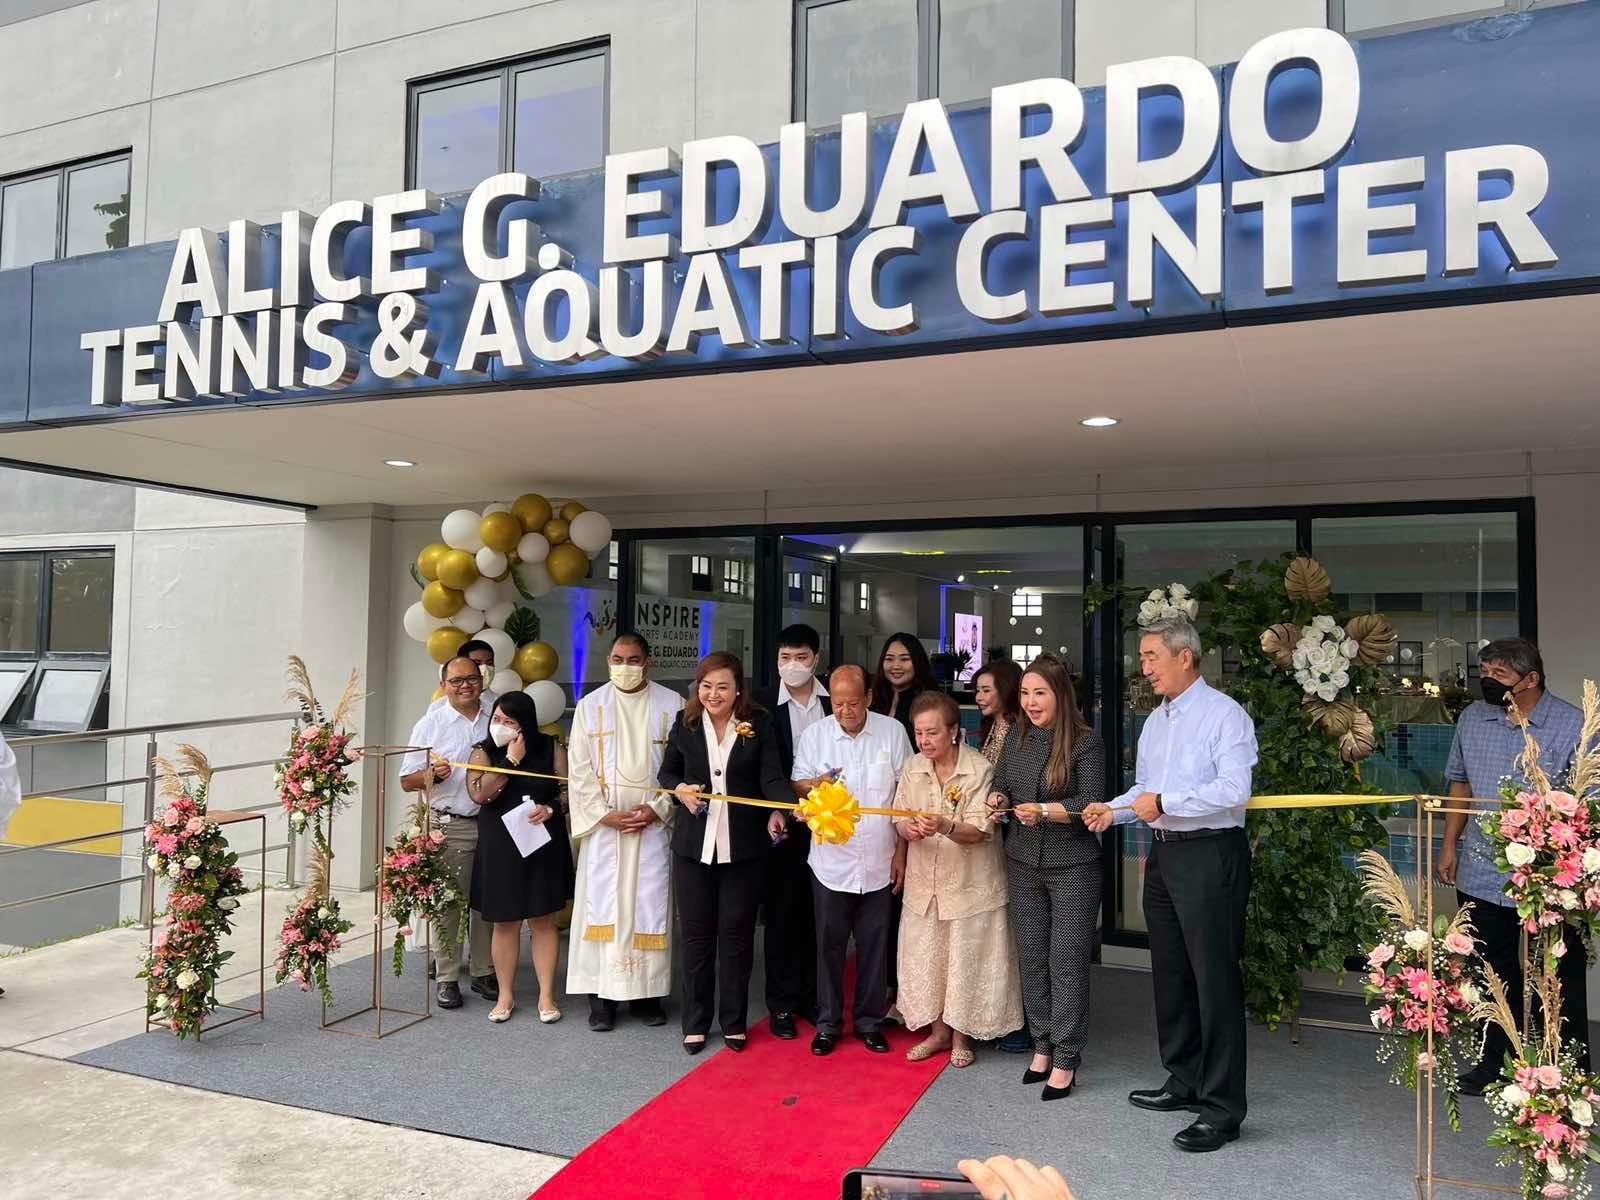 “Woman of Steel” inaugurates The Alice G. Eduardo Tennis and Aquatic Center in NU